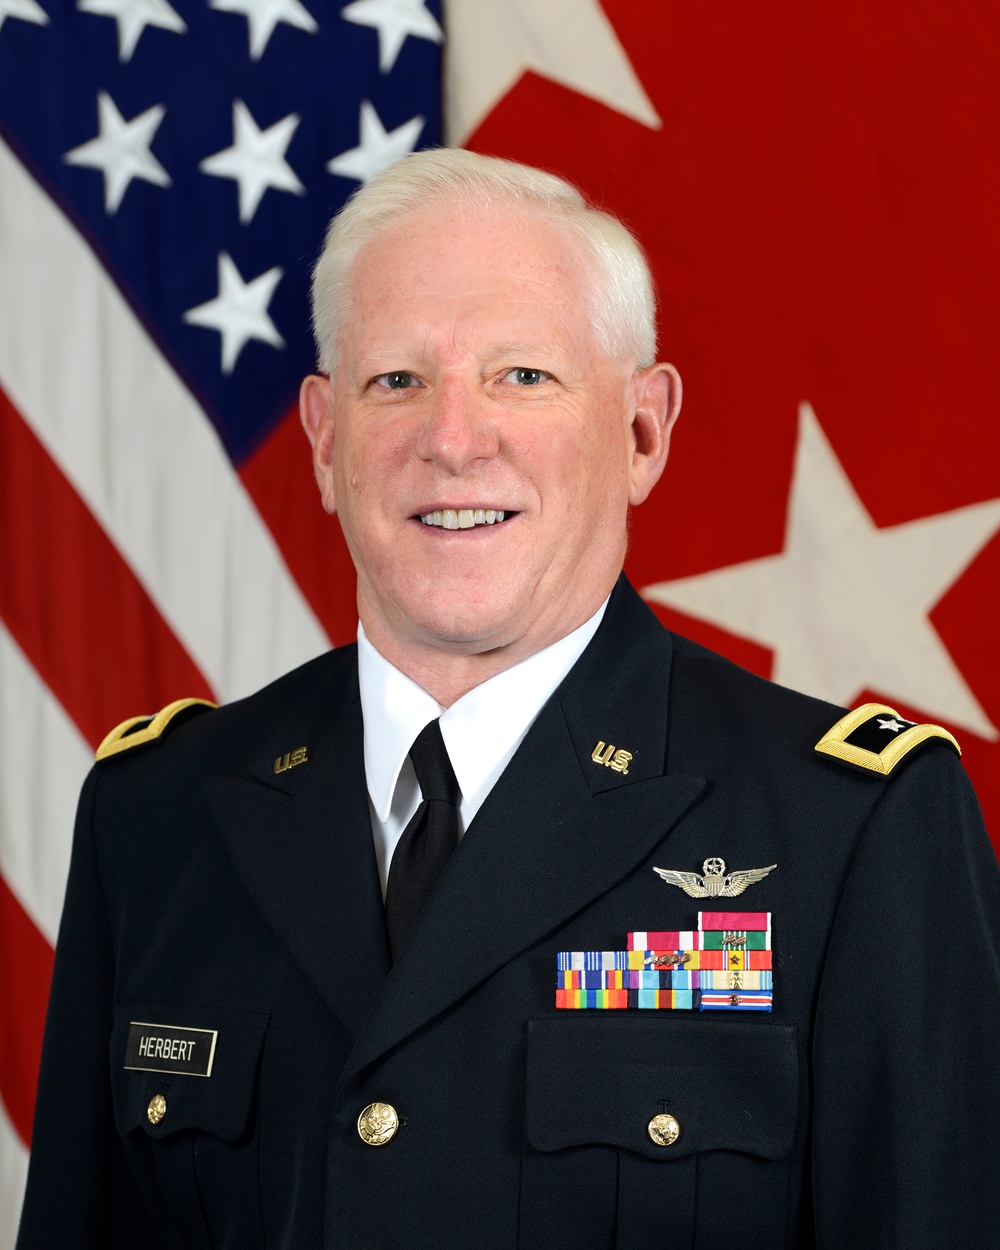 U.S. Army Maj. Gen. Robert Herbert